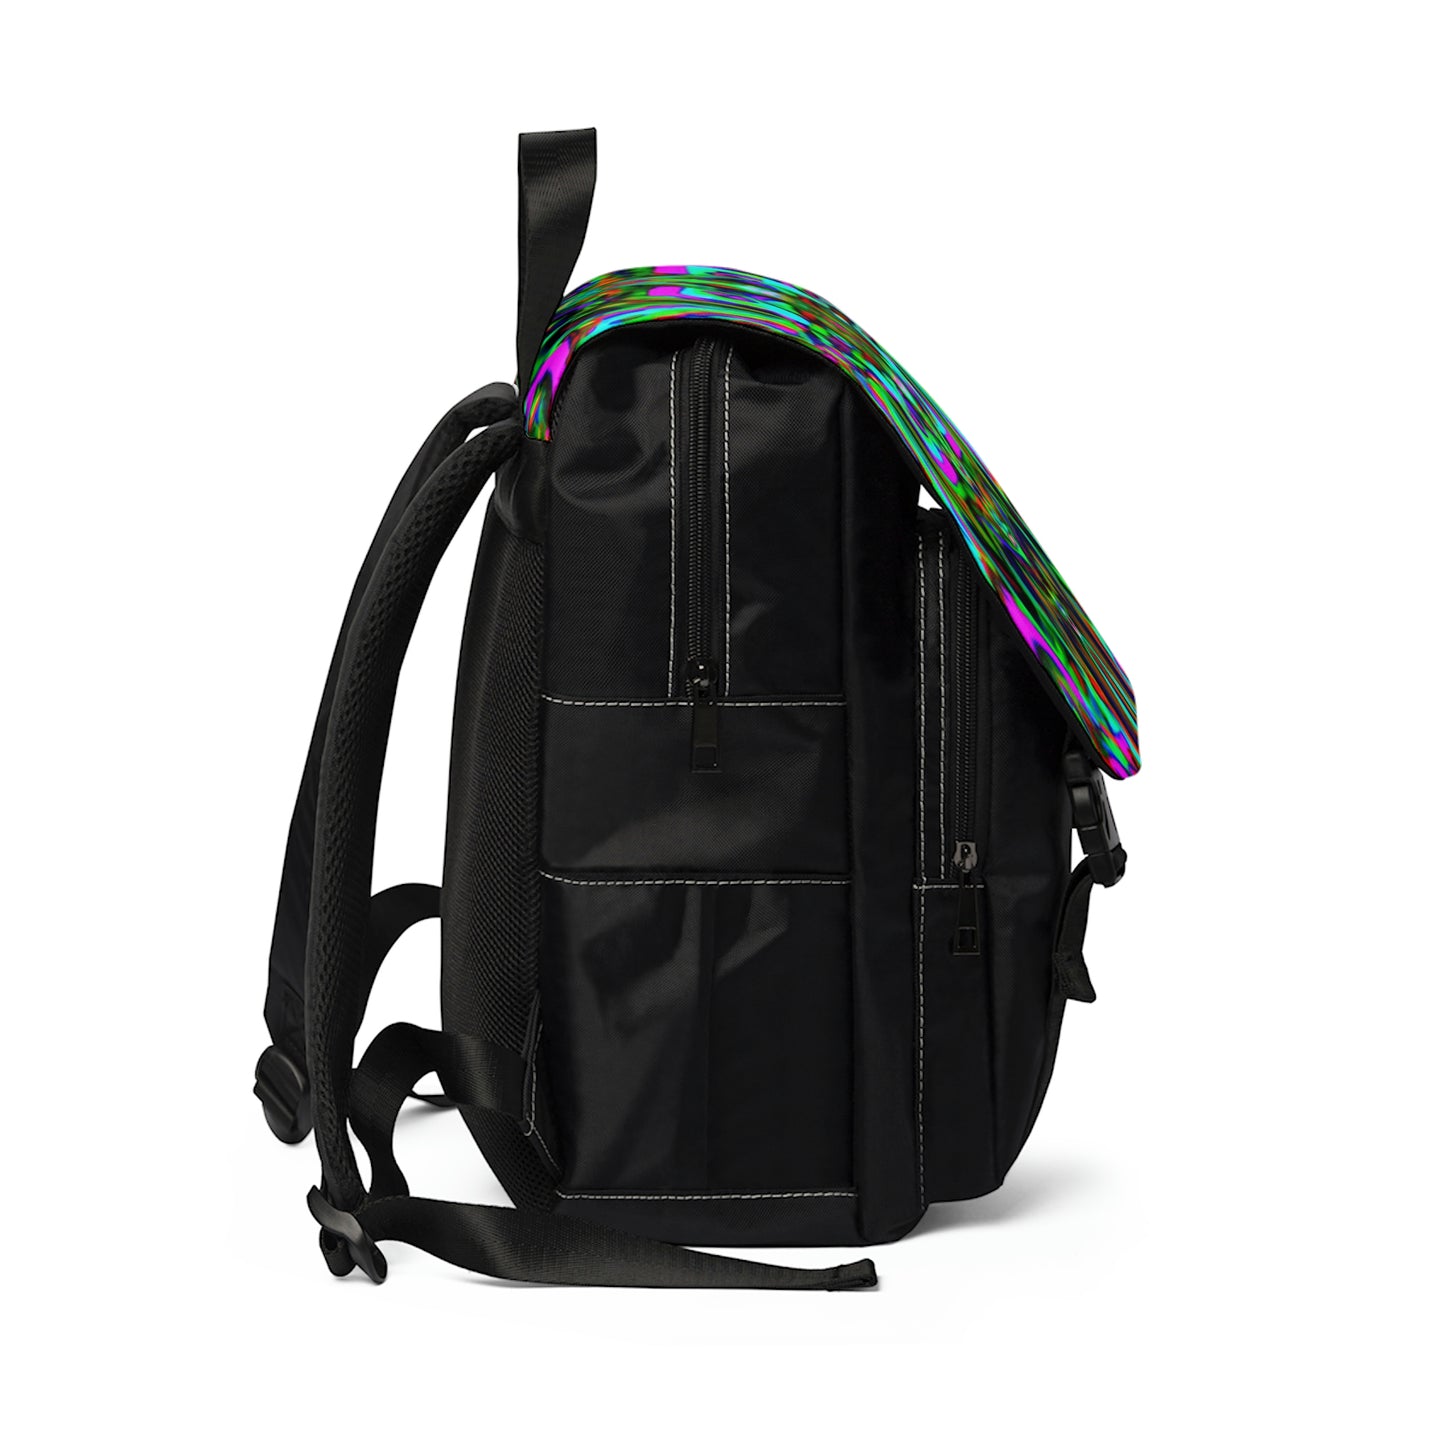 Neptune couture - Psychedelic Shoulder Travel Backpack Bag